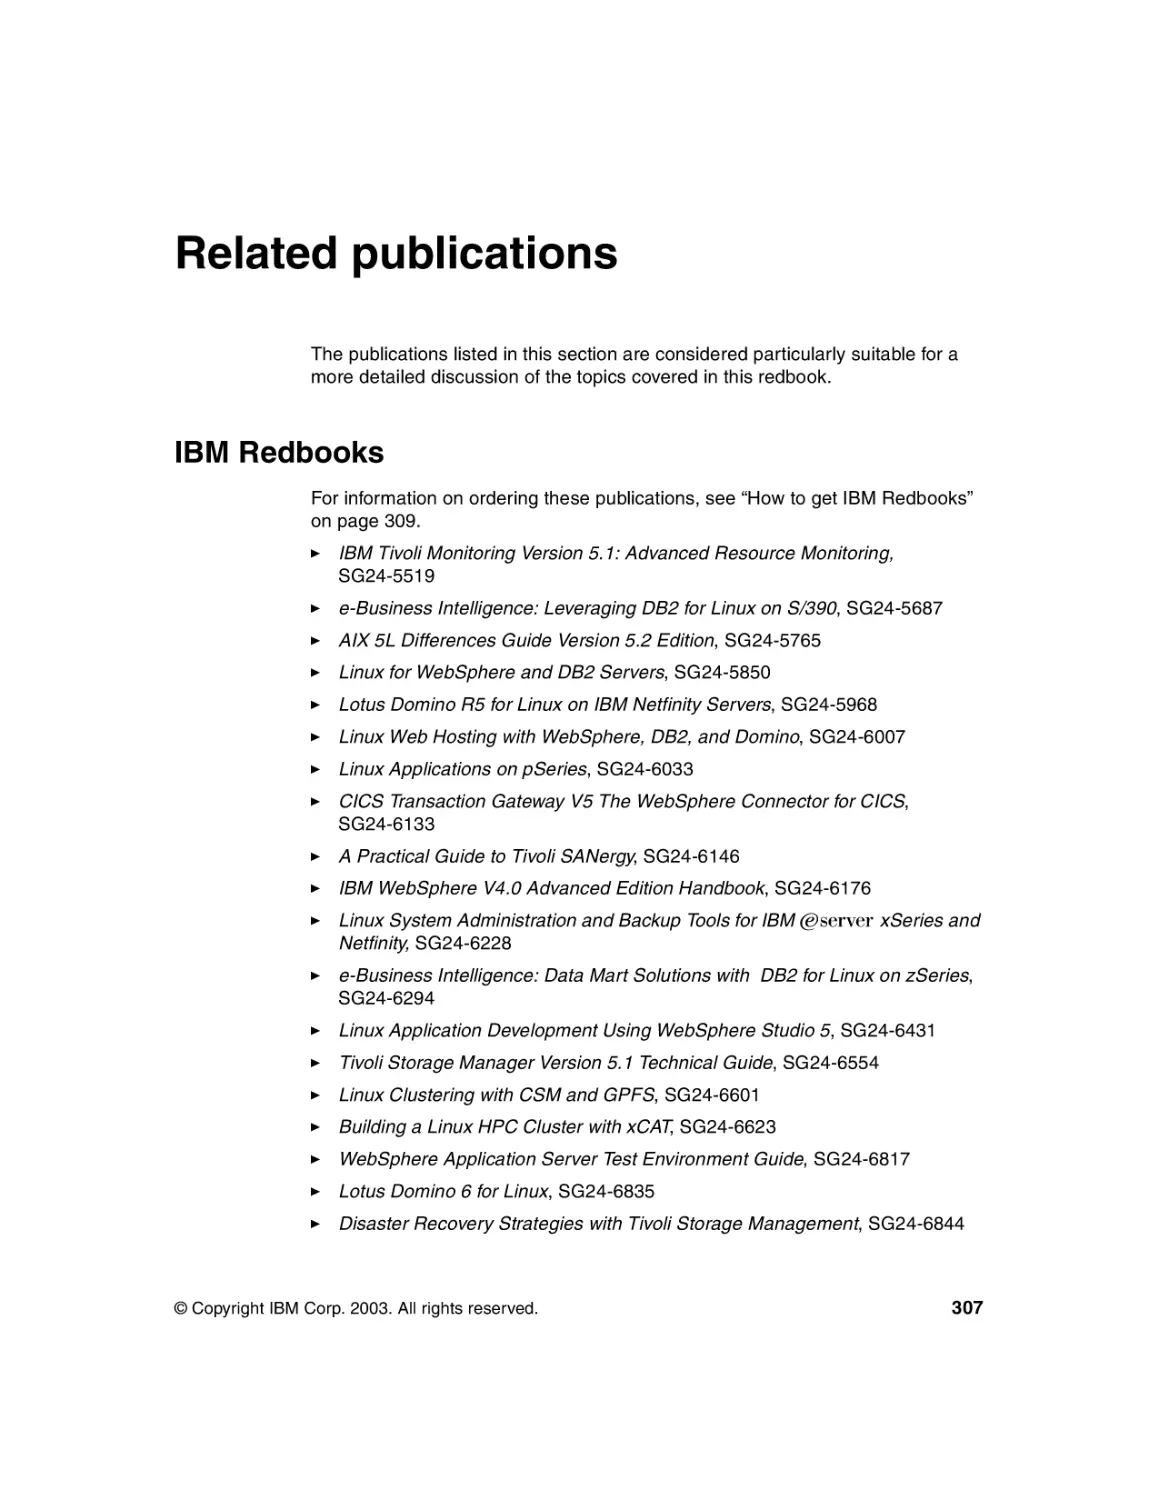 Related publications
IBM Redbooks